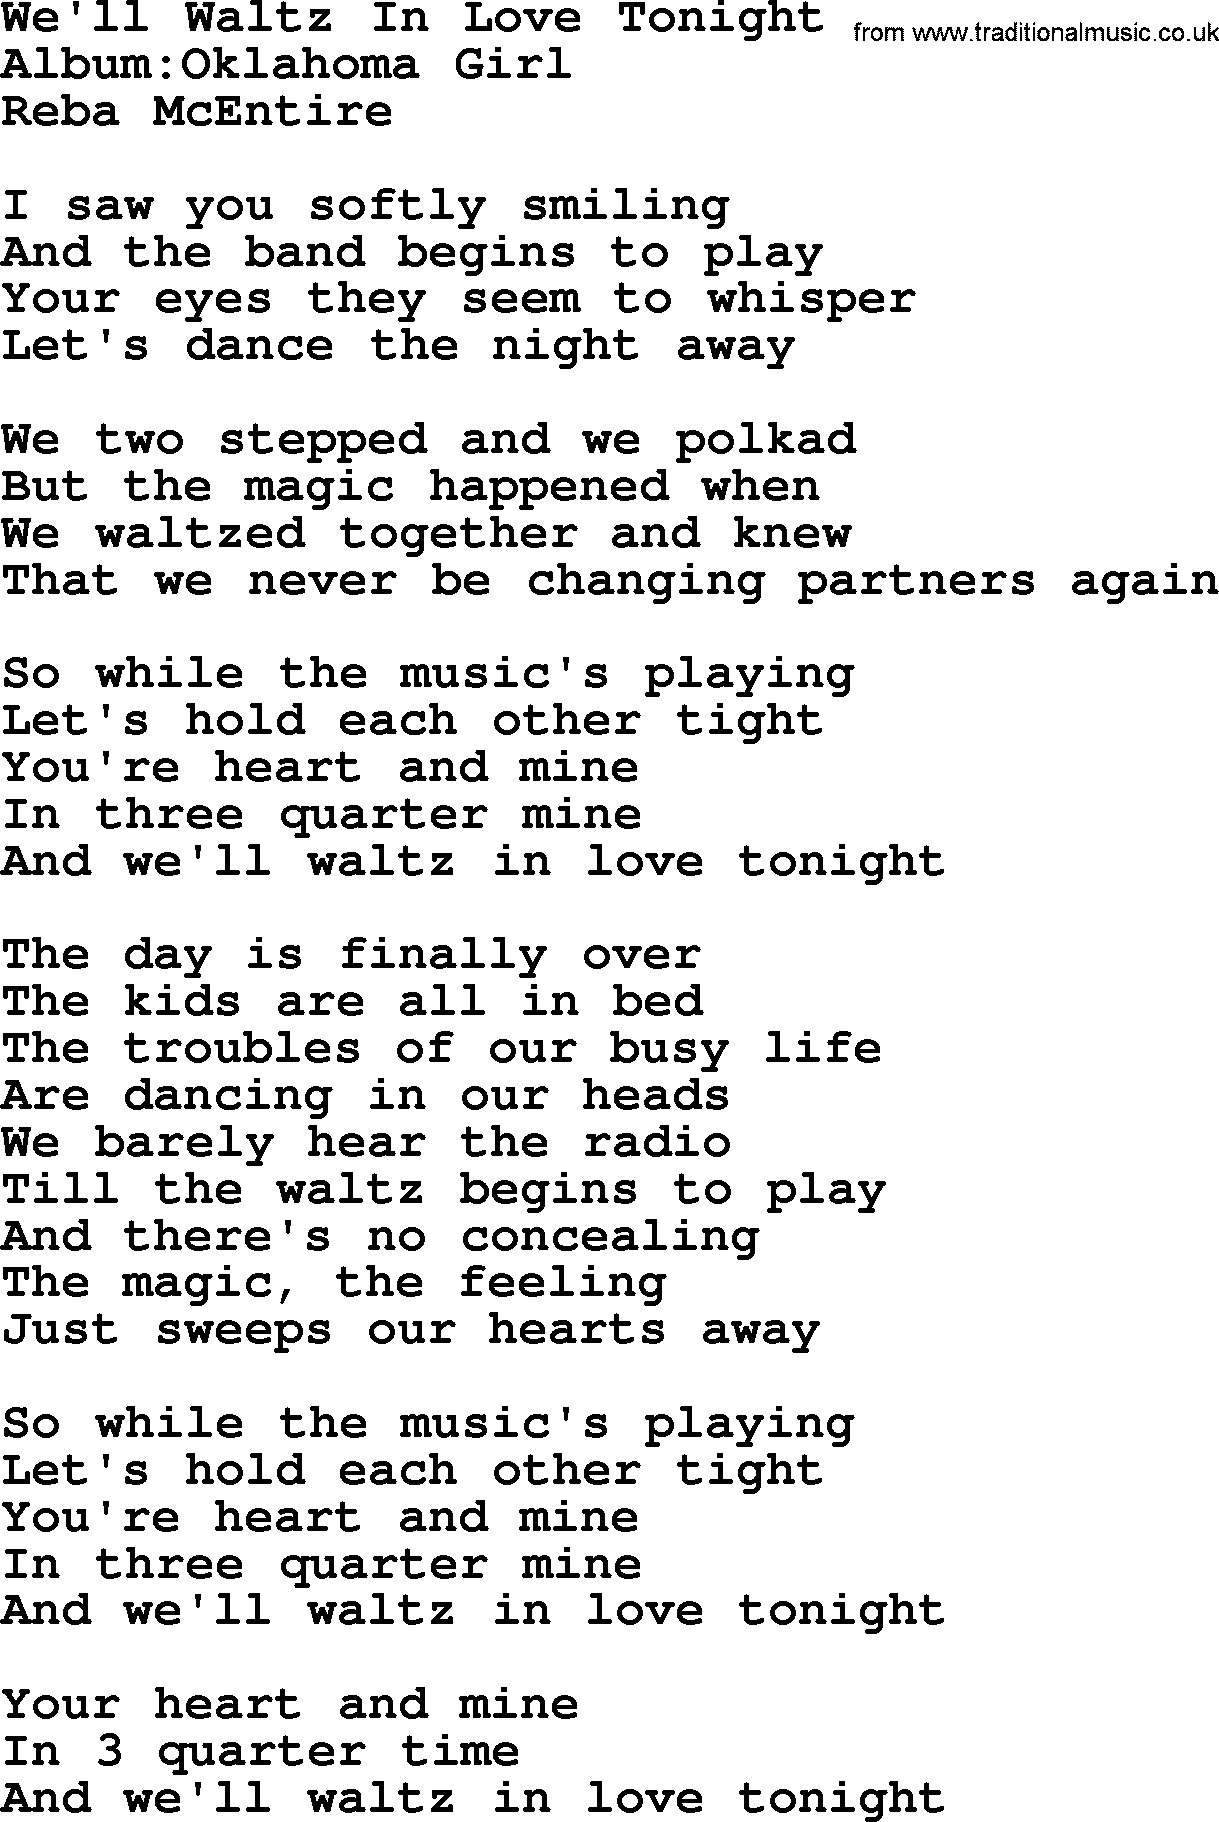 Reba McEntire song: We'll Waltz In Love Tonight lyrics